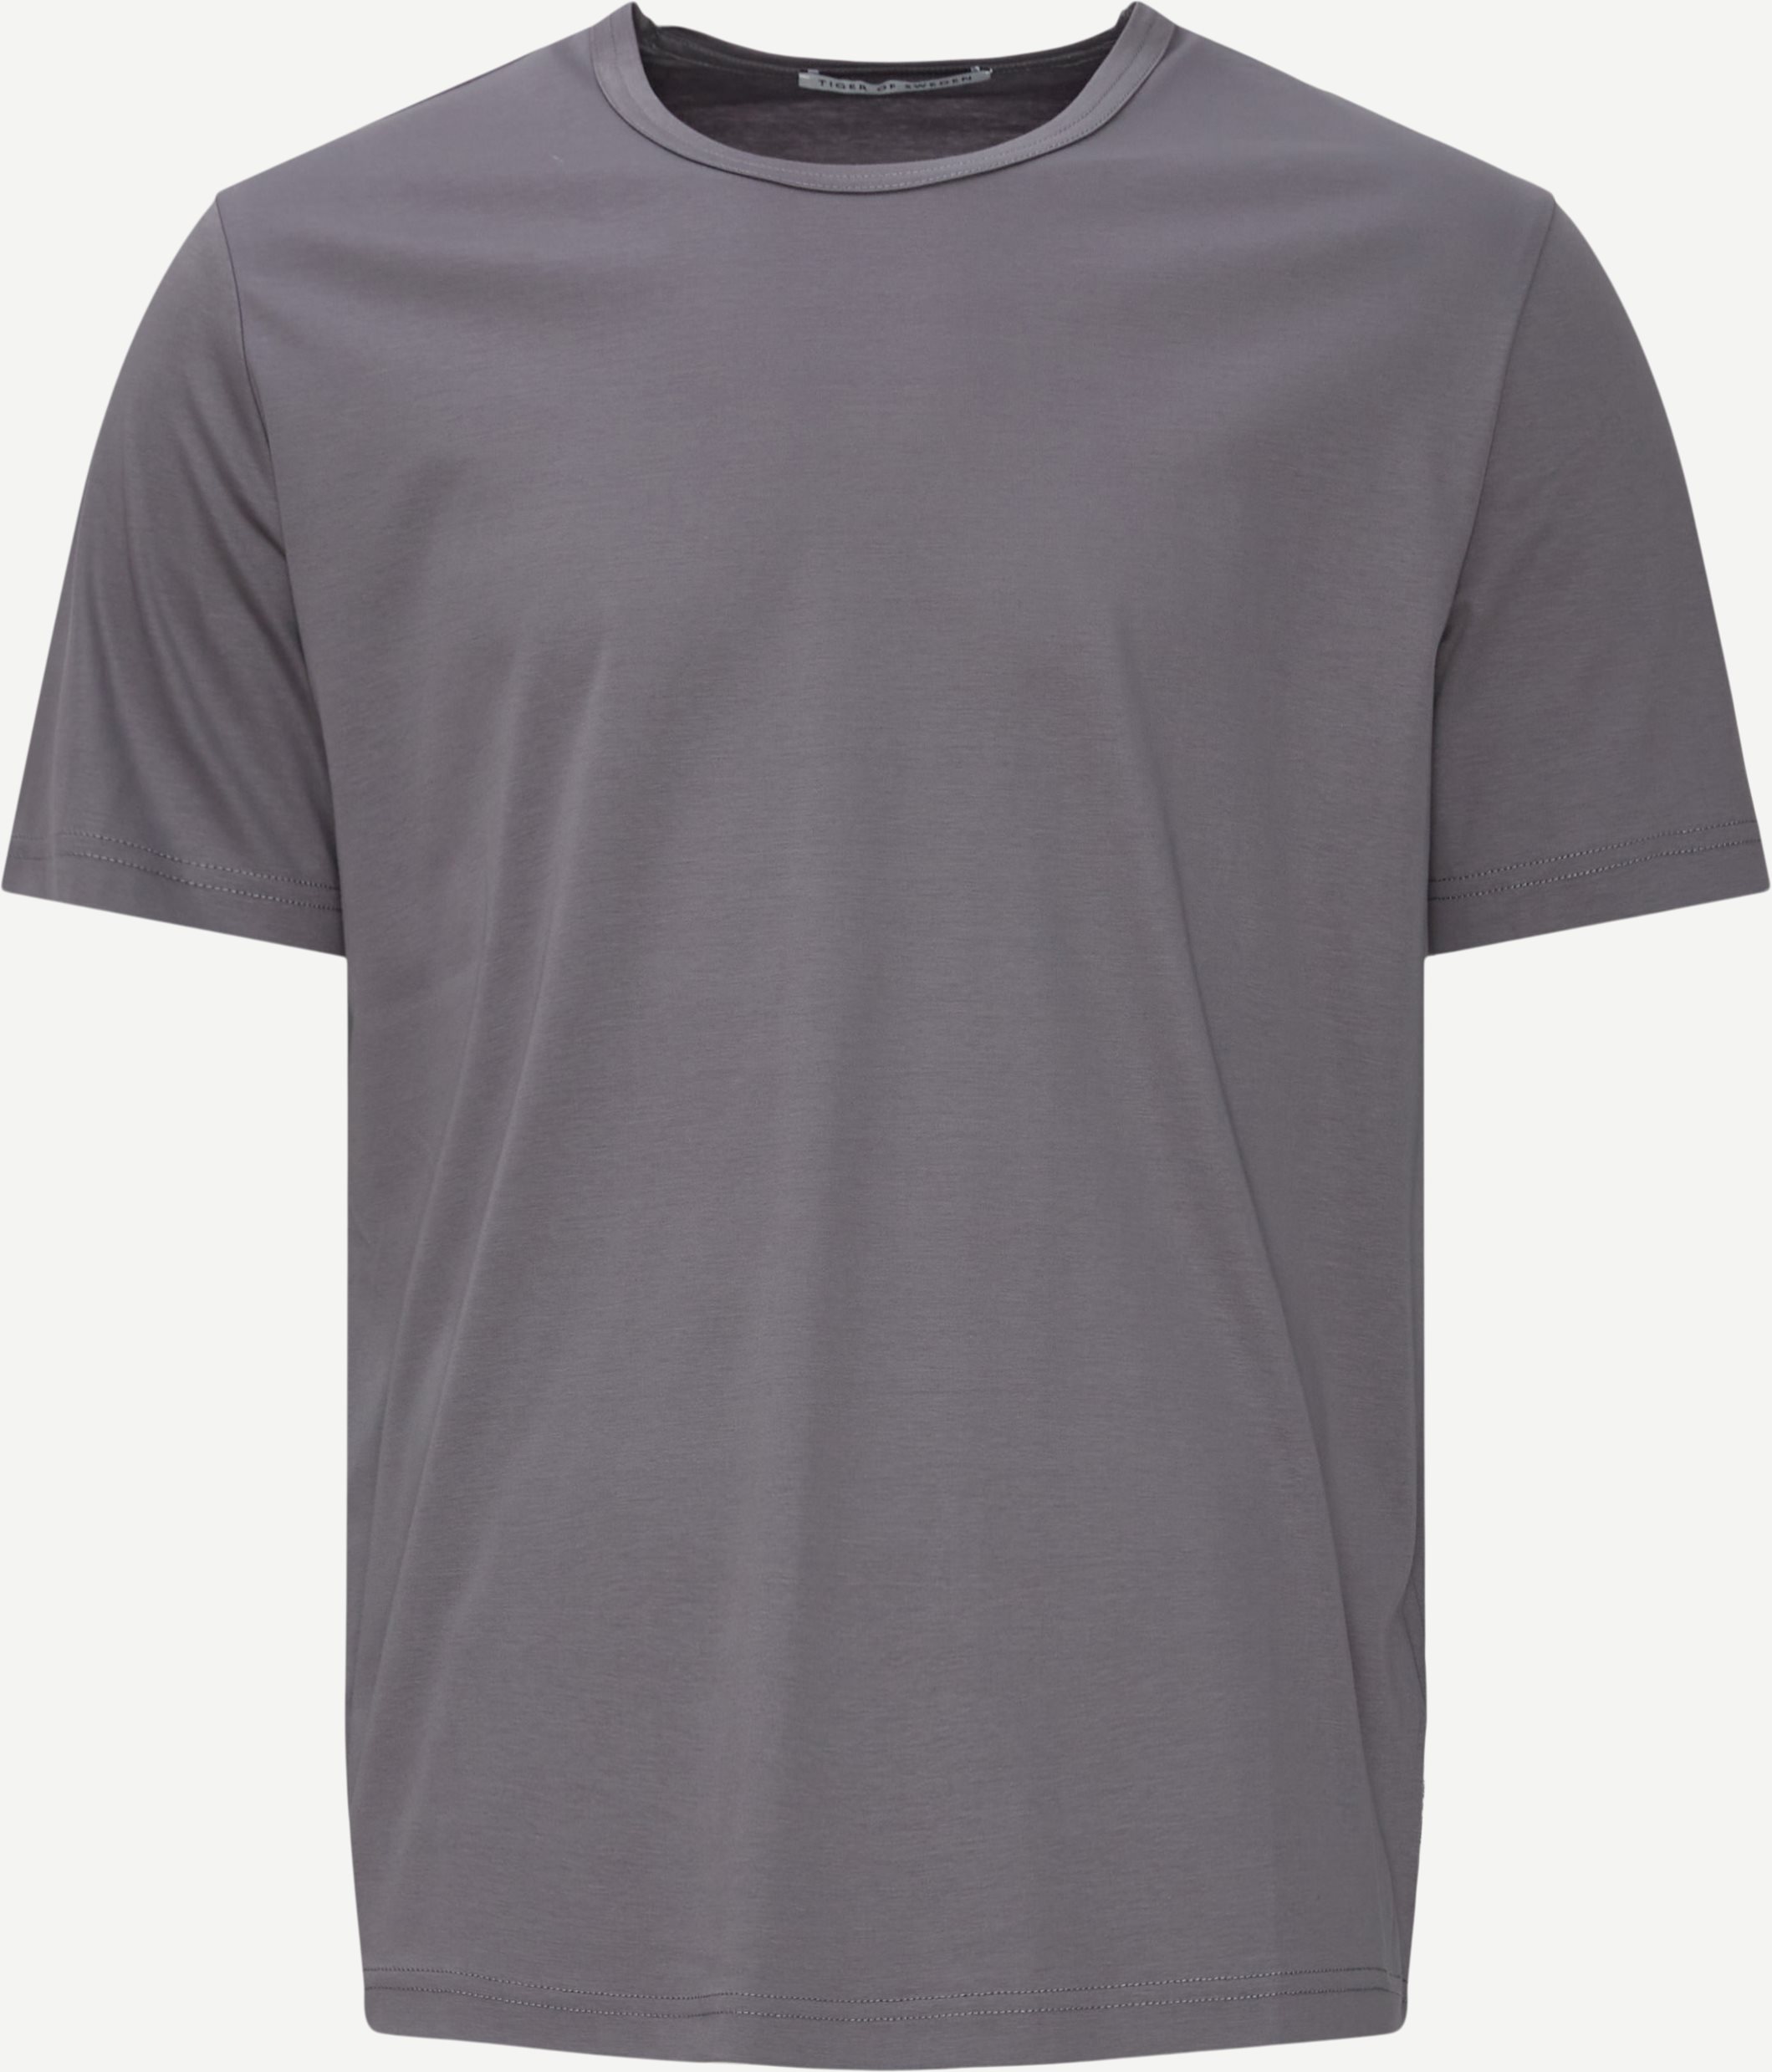 T-shirts - Slim fit - Grey